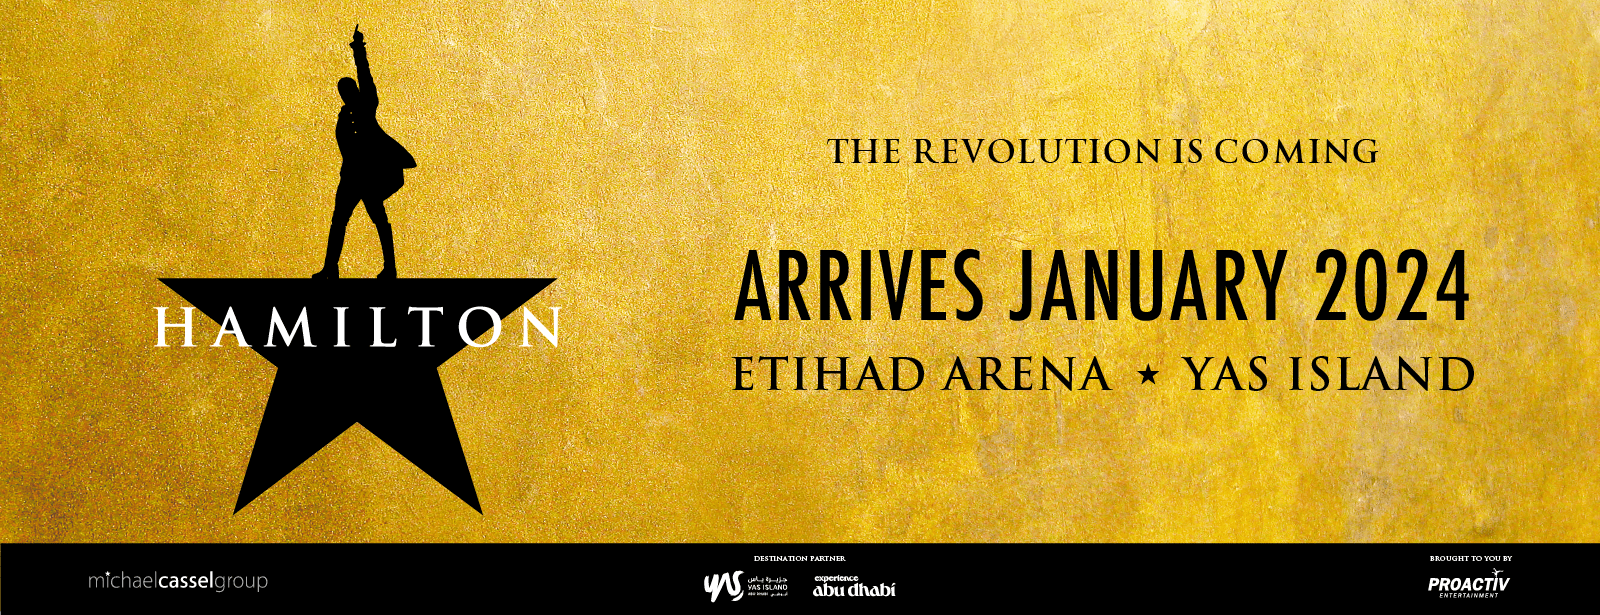 Hamilton at Etihad Arena, Abu Dhabi - Coming Soon in UAE